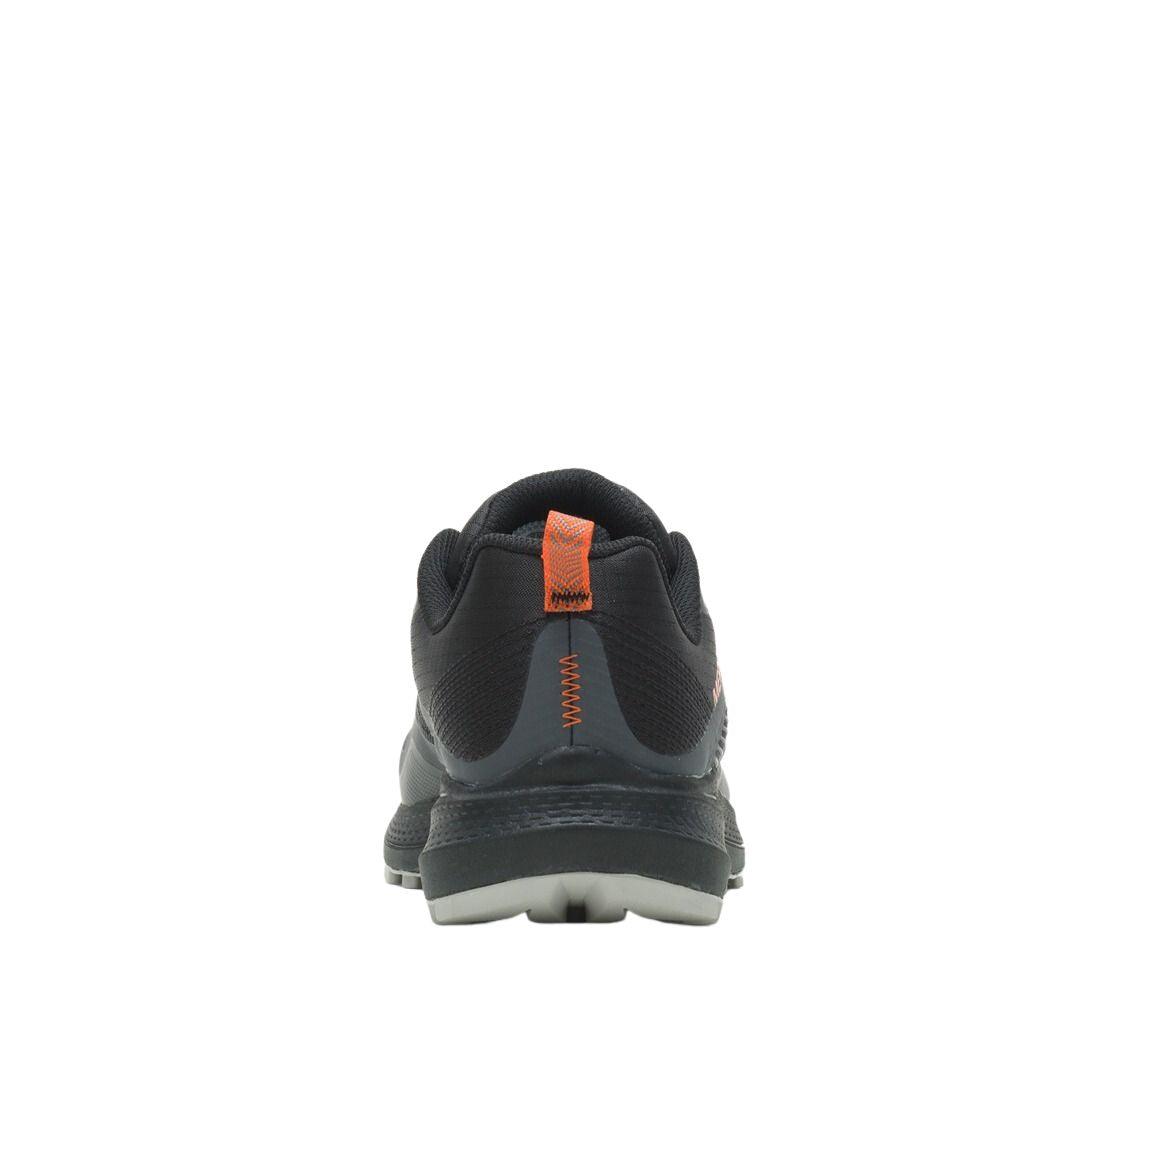 Merrell MQM 3 Hiking shoes